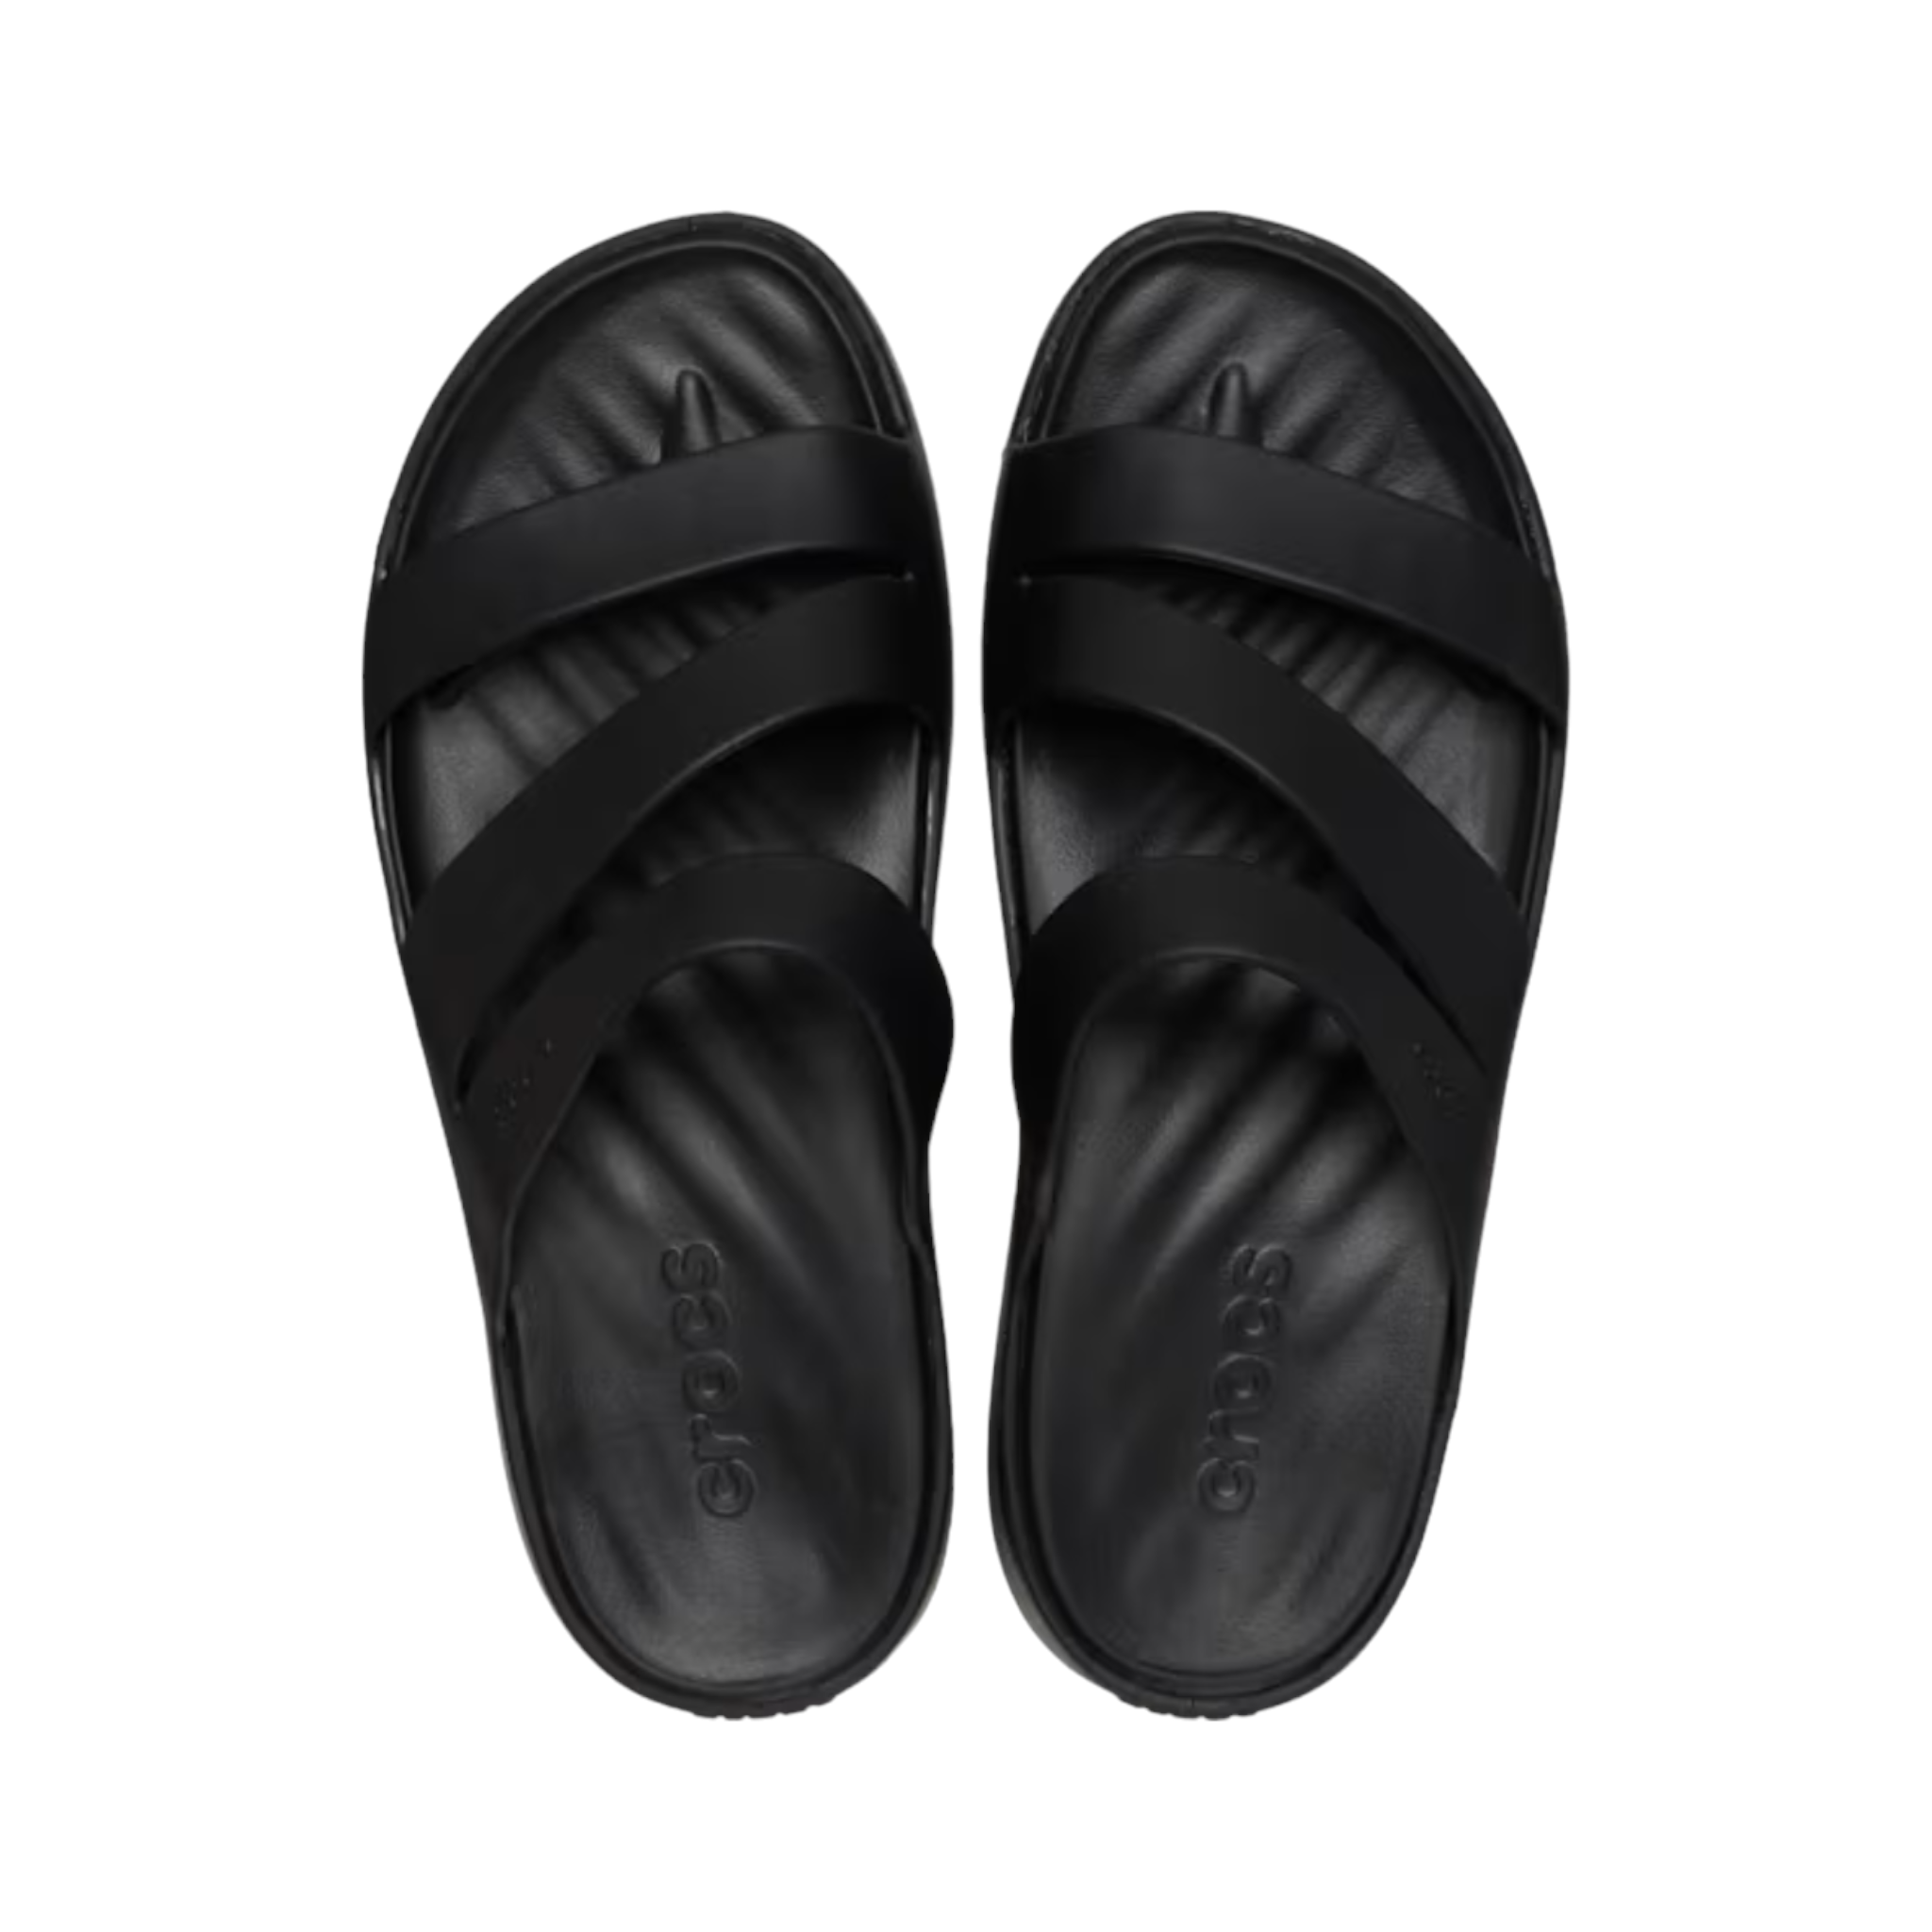 Getaway Strappy - shoe&amp;me - Crocs - Slides - Sandals, Slide/Scuff, Summer, Womens